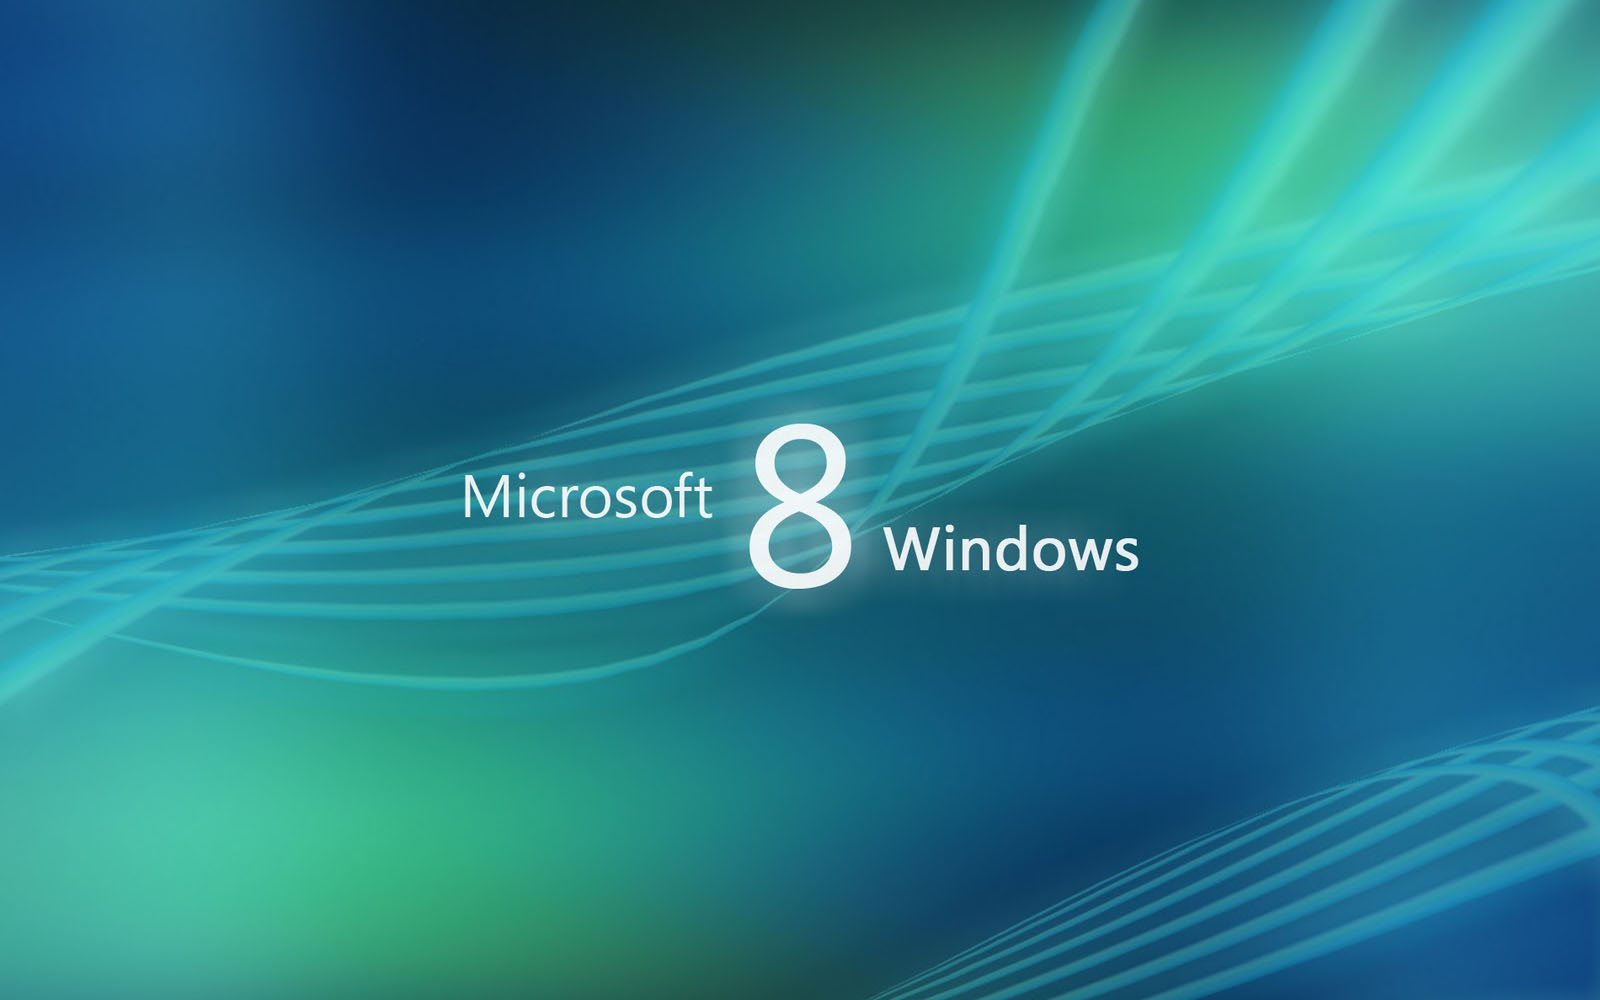 Windows 8 Latest Desktop Background Themes Free Windows 8 Background